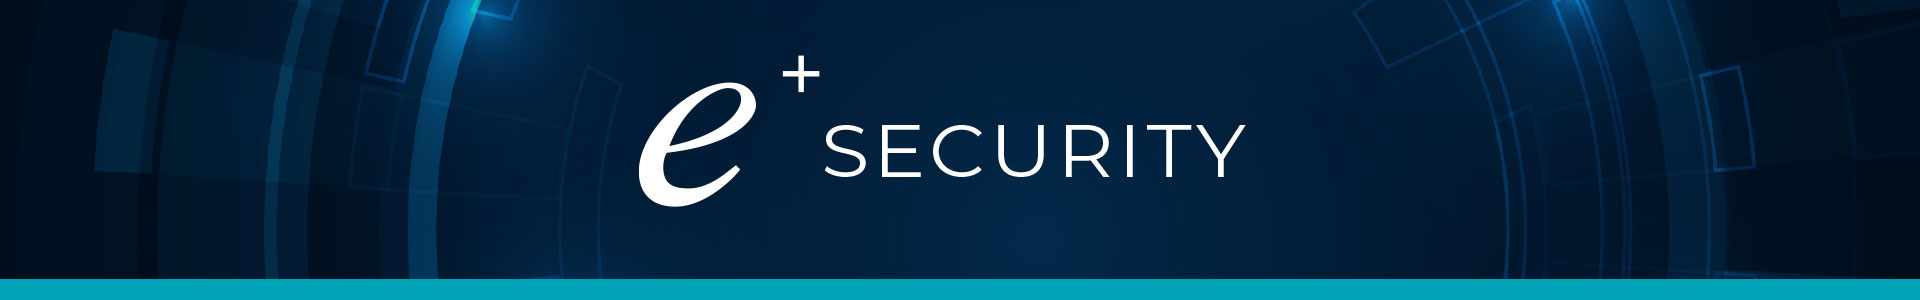 ePlus-Security-Header